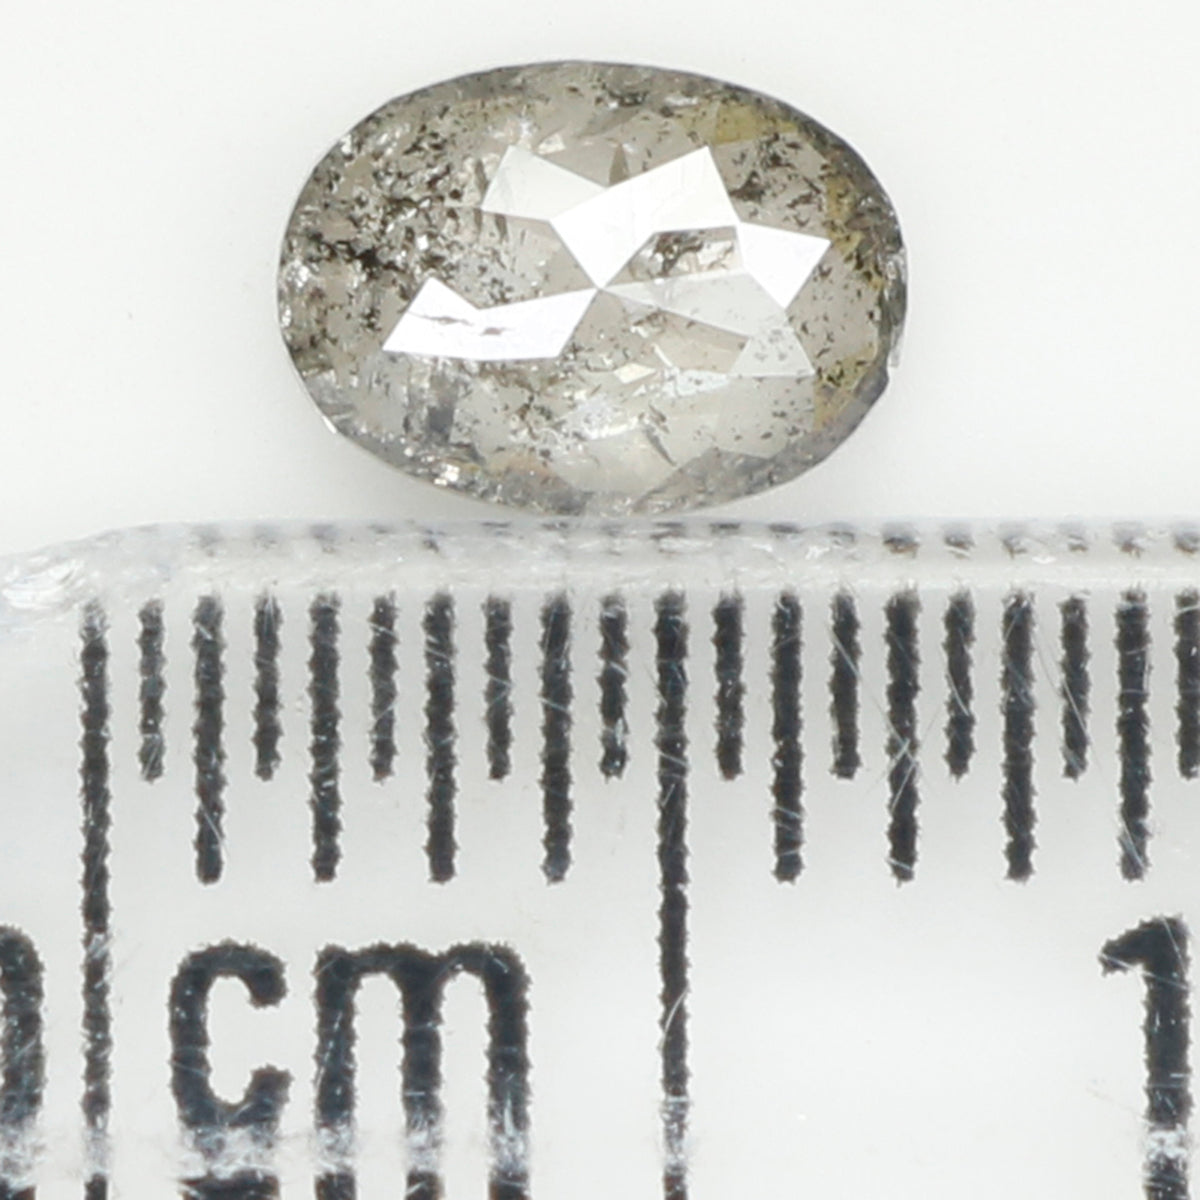 0.36 Ct Natural Loose Diamond, Oval Diamond, Black Diamond, Grey Diamond, Salt and Pepper Diamond, Antique Diamond, Real Diamond L424